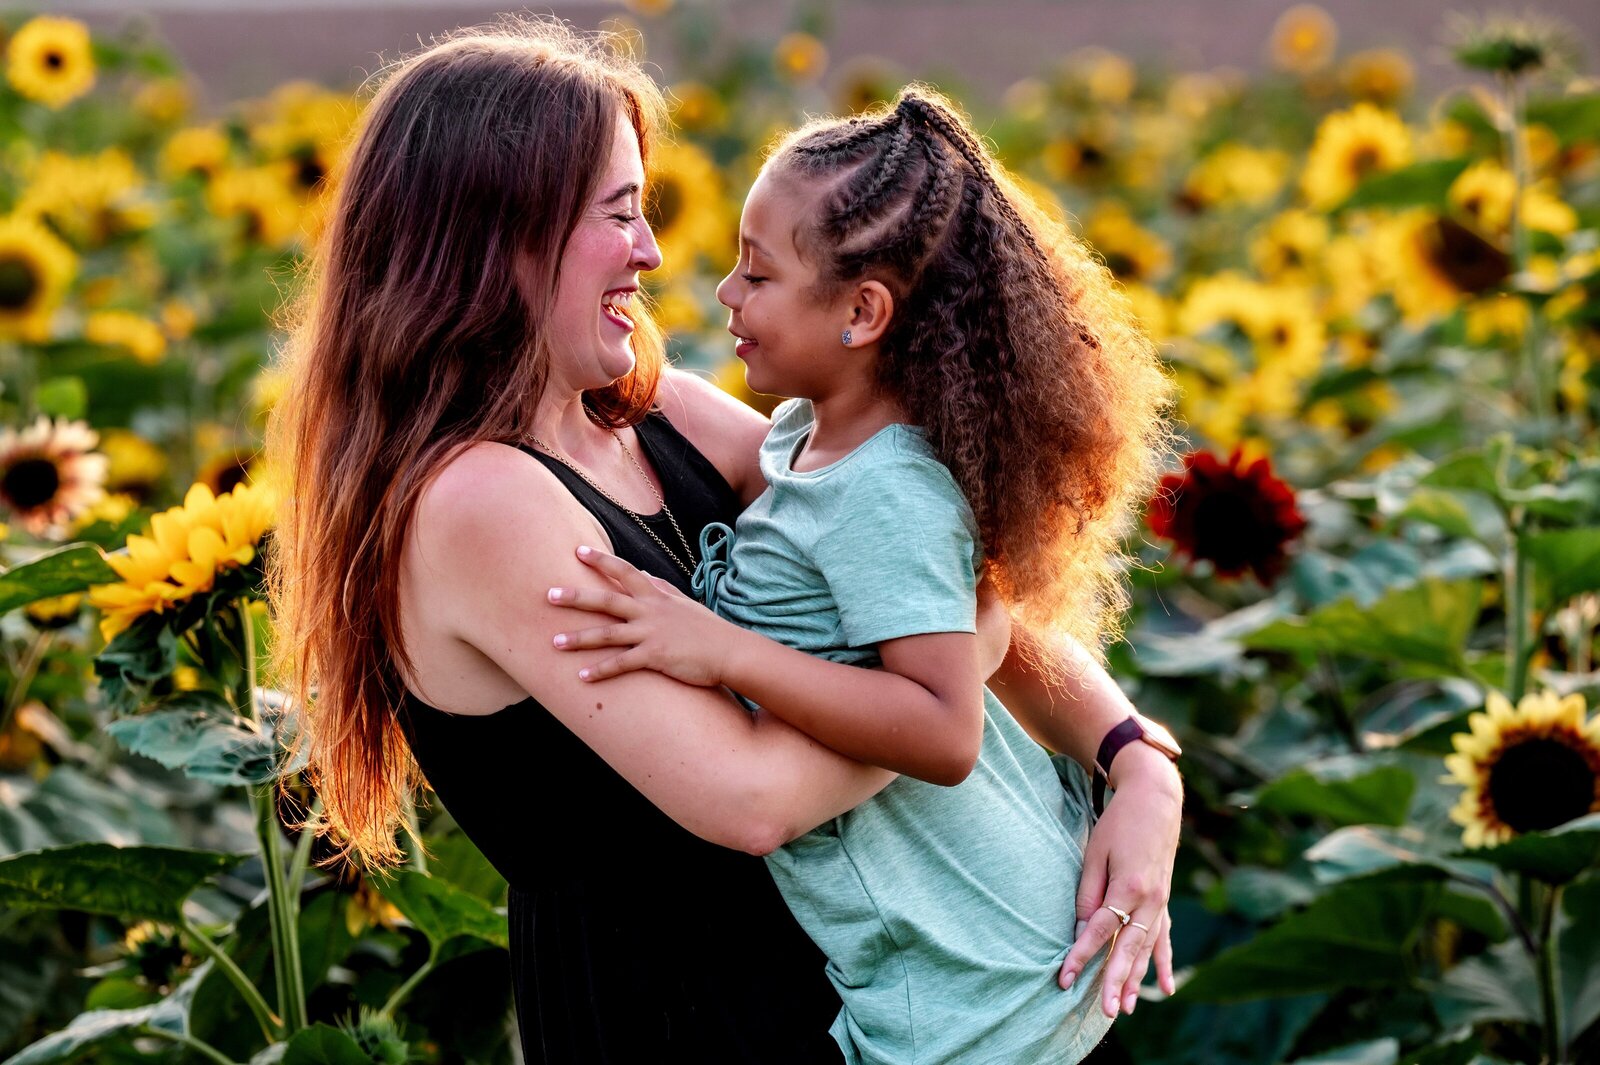 Mom & child in sunflowers